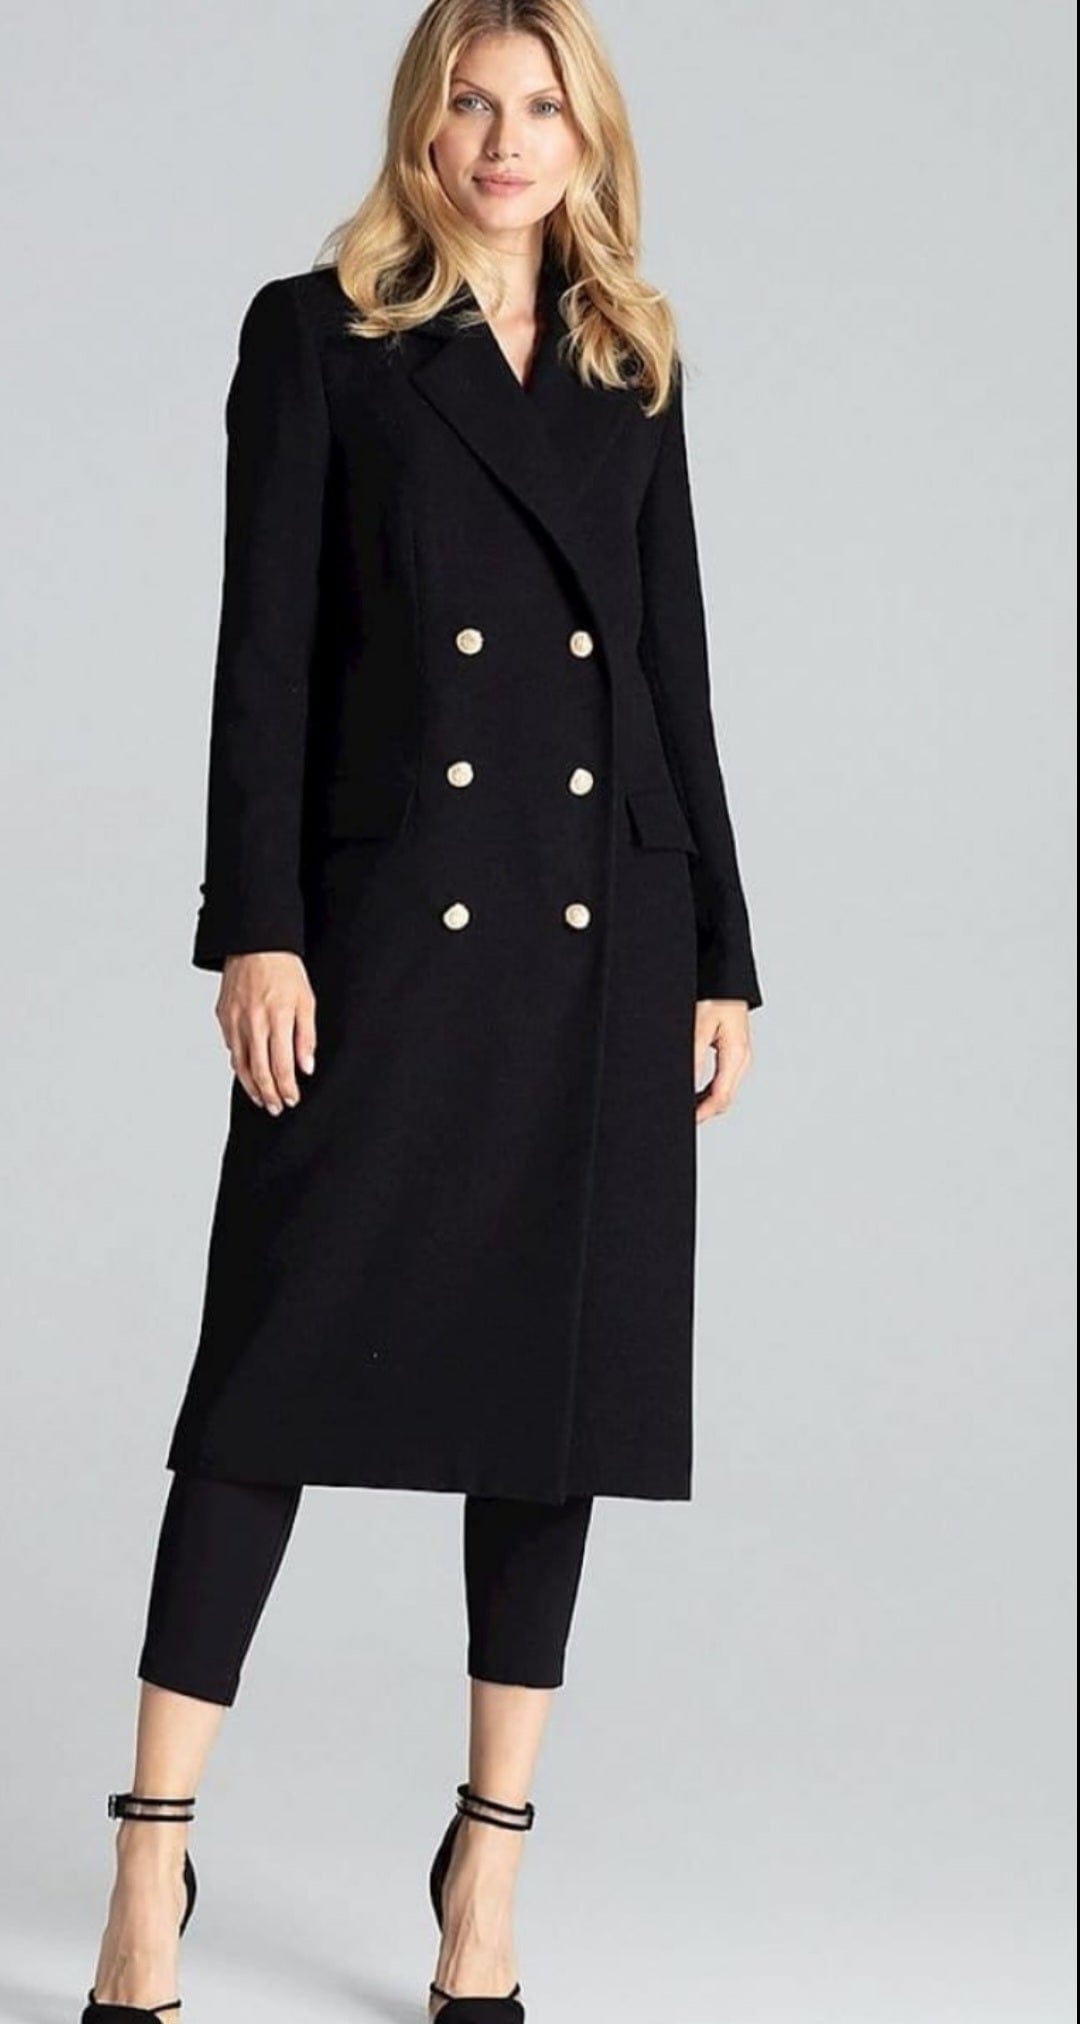 Teon Clothing EU Black double-breasted classic coat